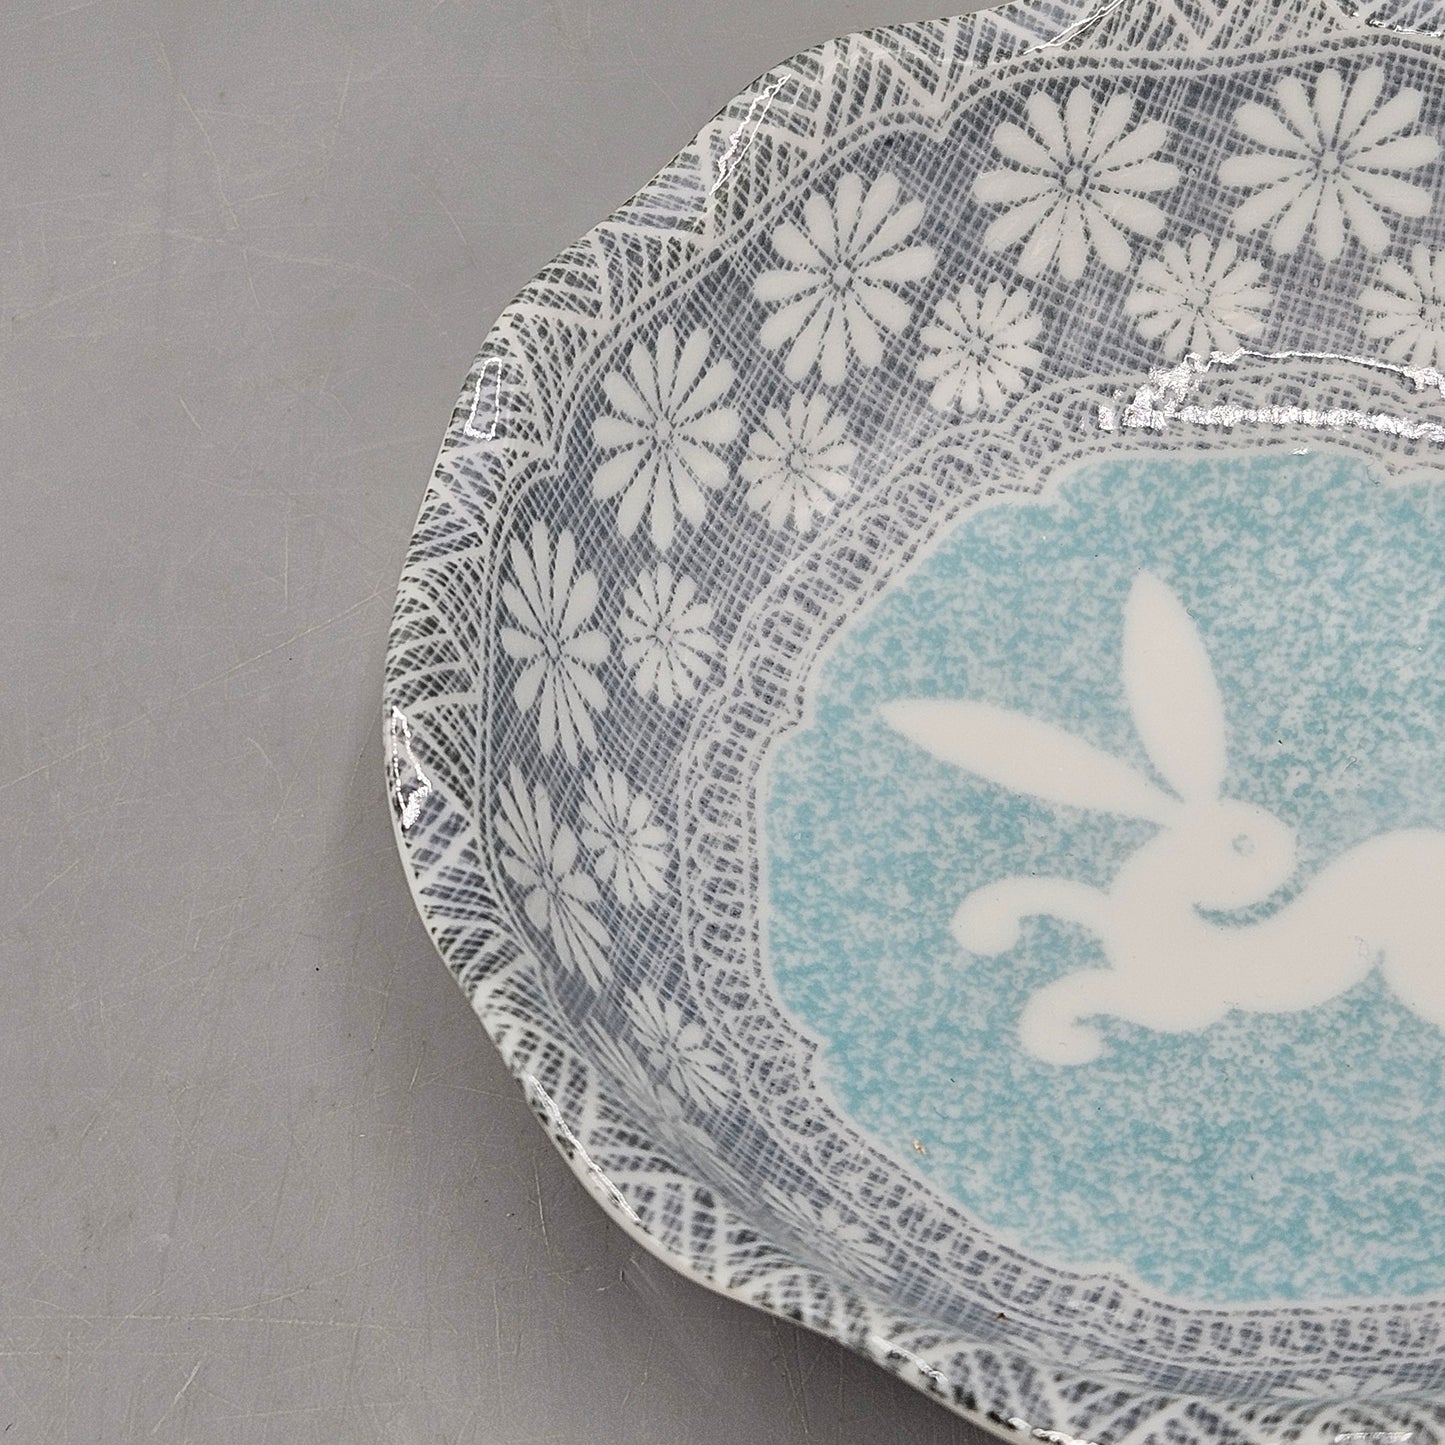 Vintage Porcelain Kotobuki Japan Bunny Rabbit Ruffled Edge Bowl